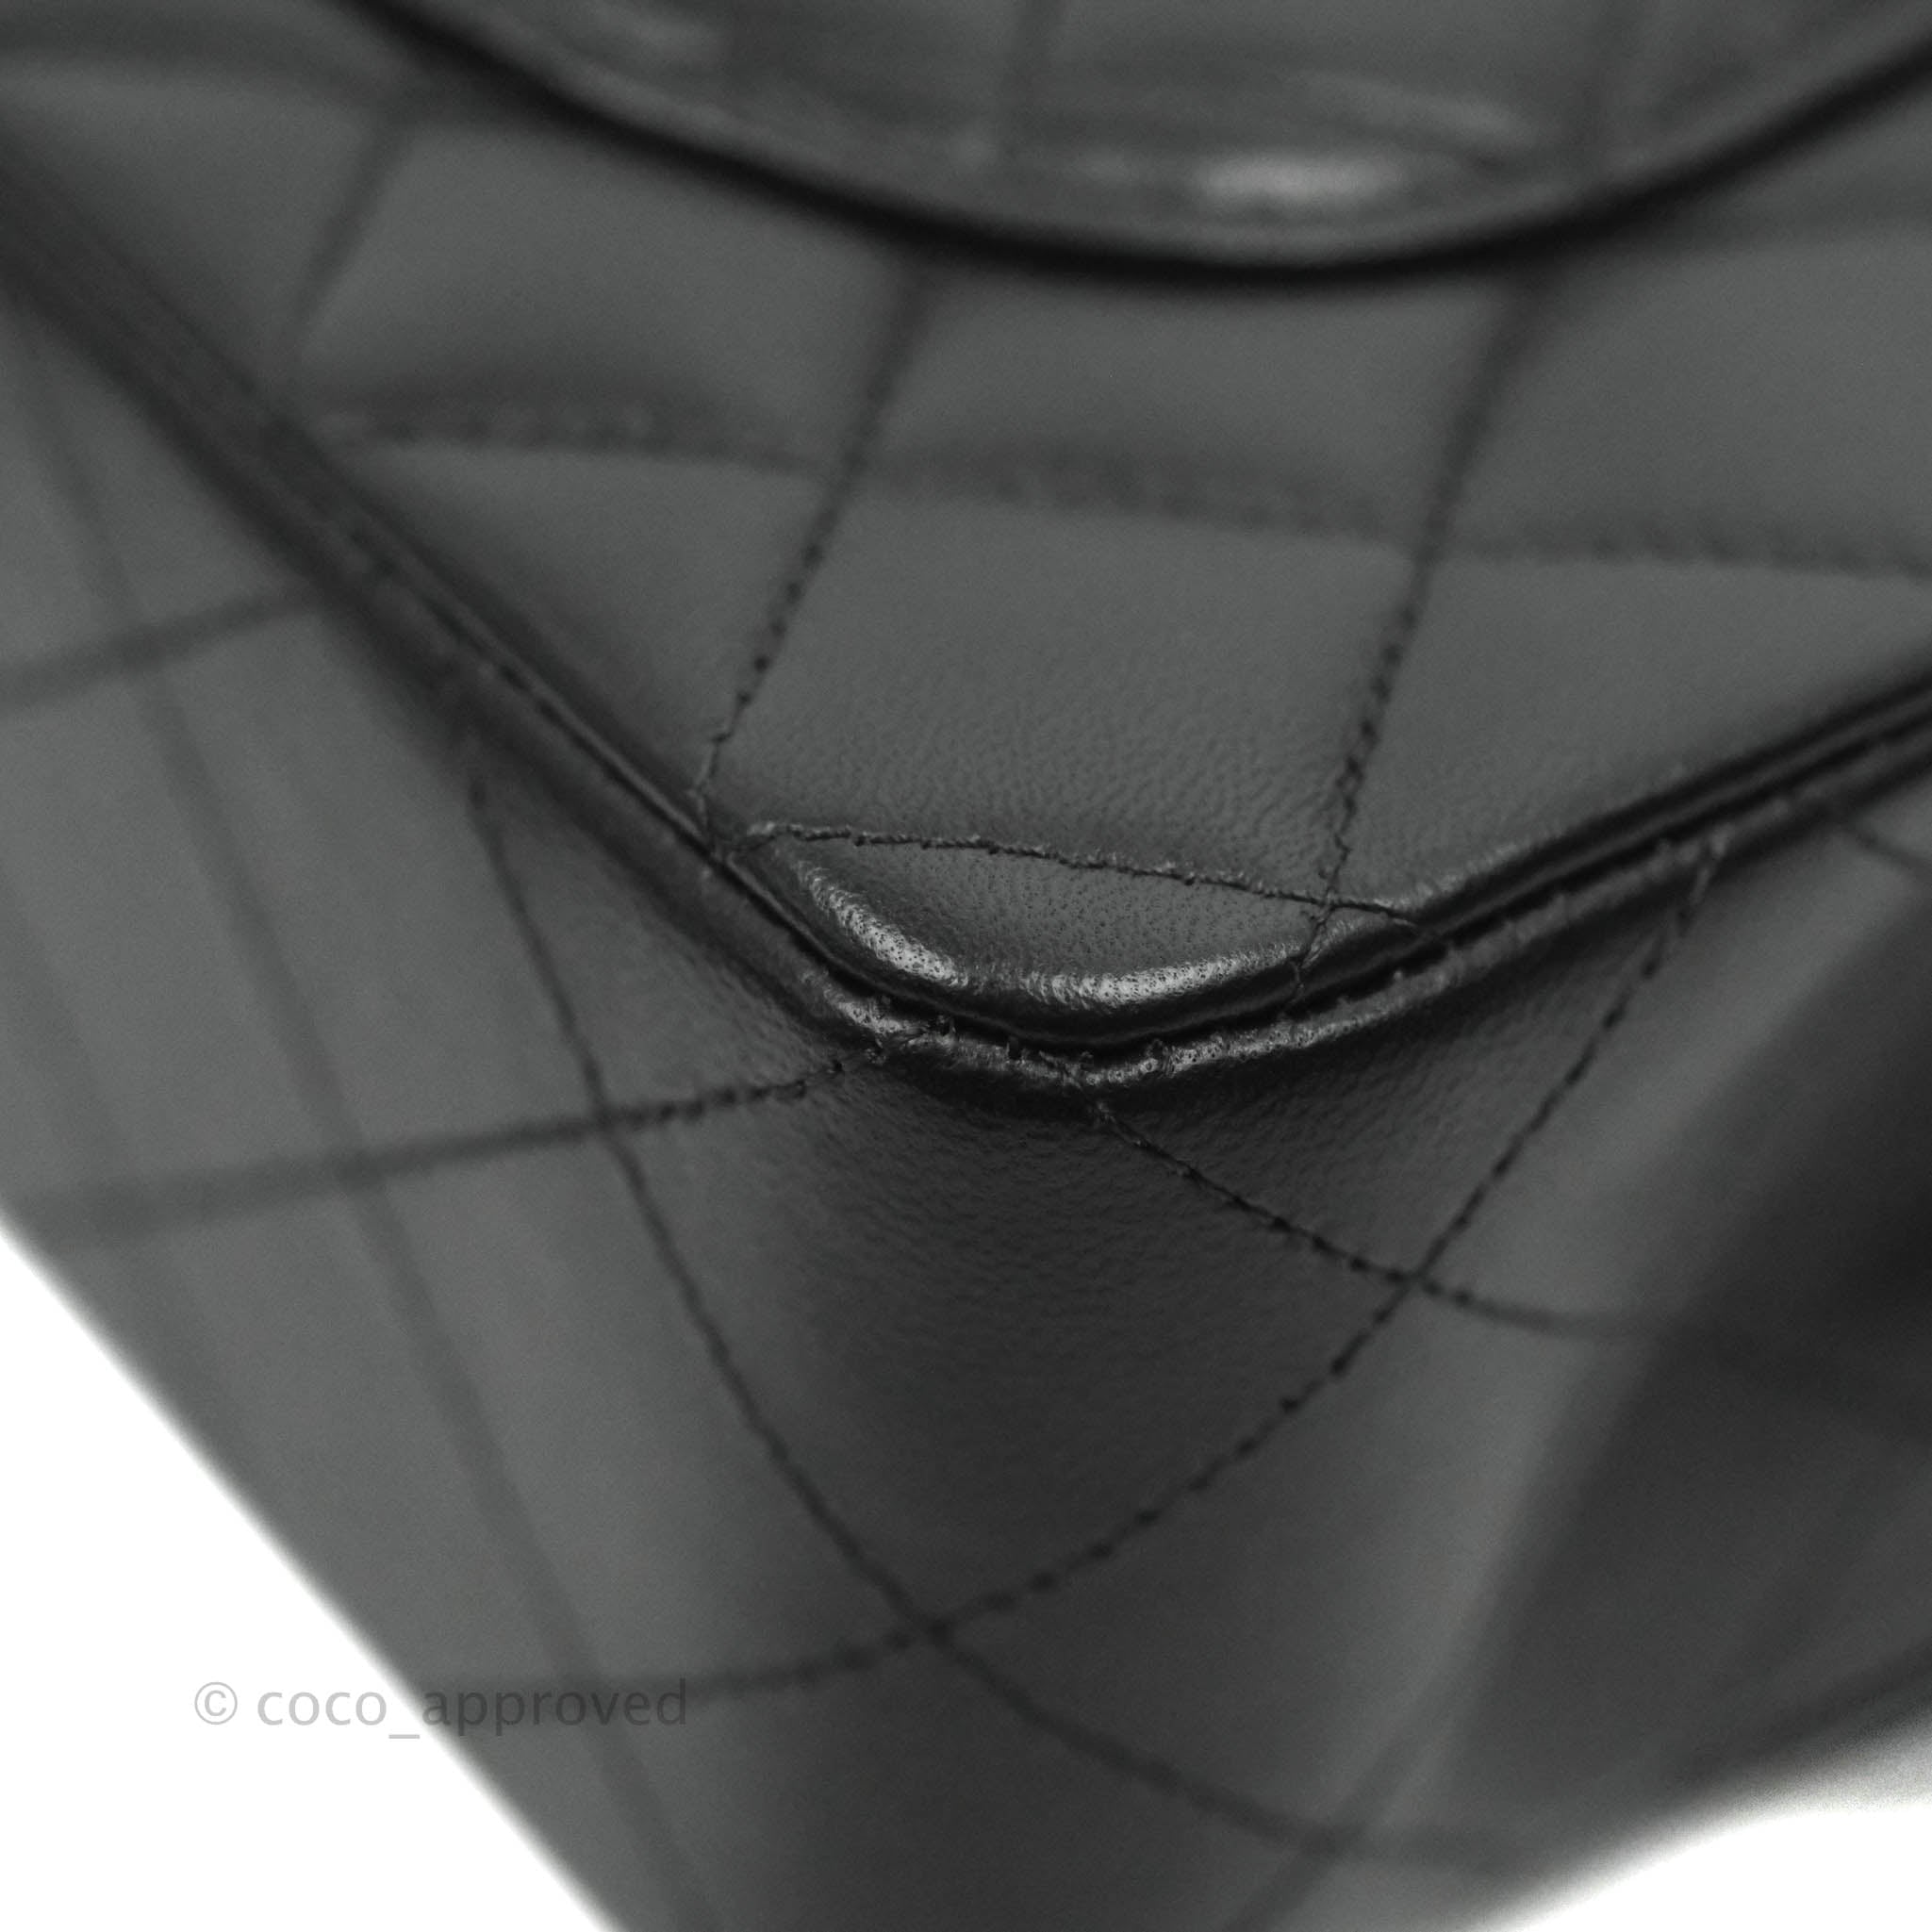 Chanel Small S/M Classic Flap Black Lambskin Silver Hardware